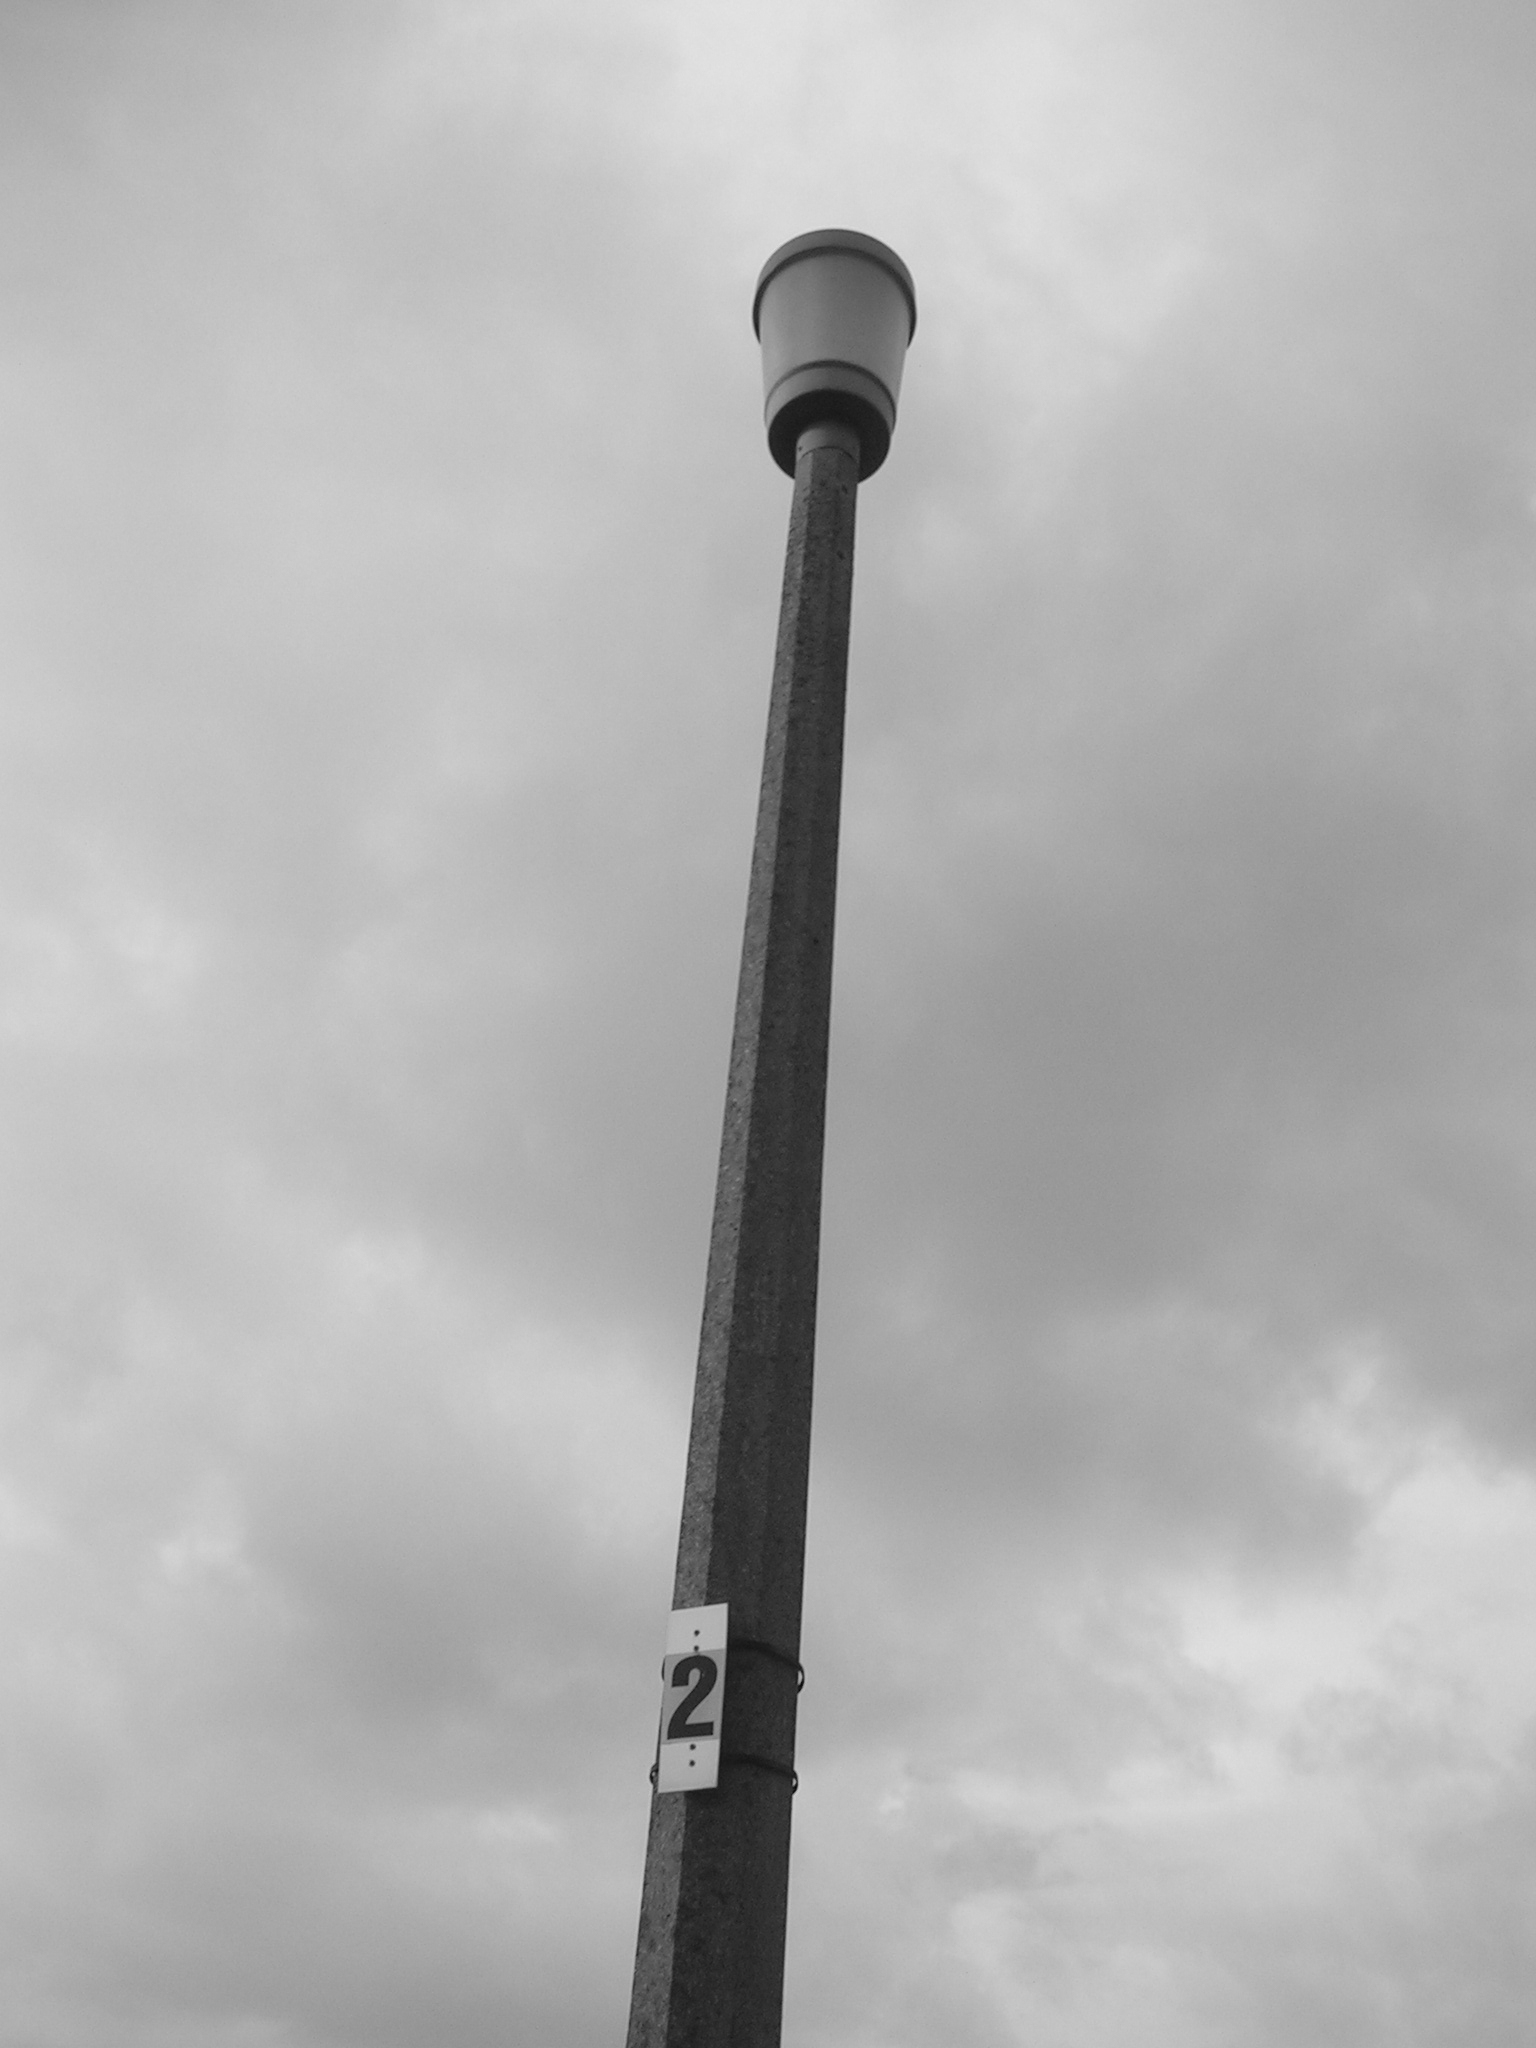 a tall pole with a street light on top